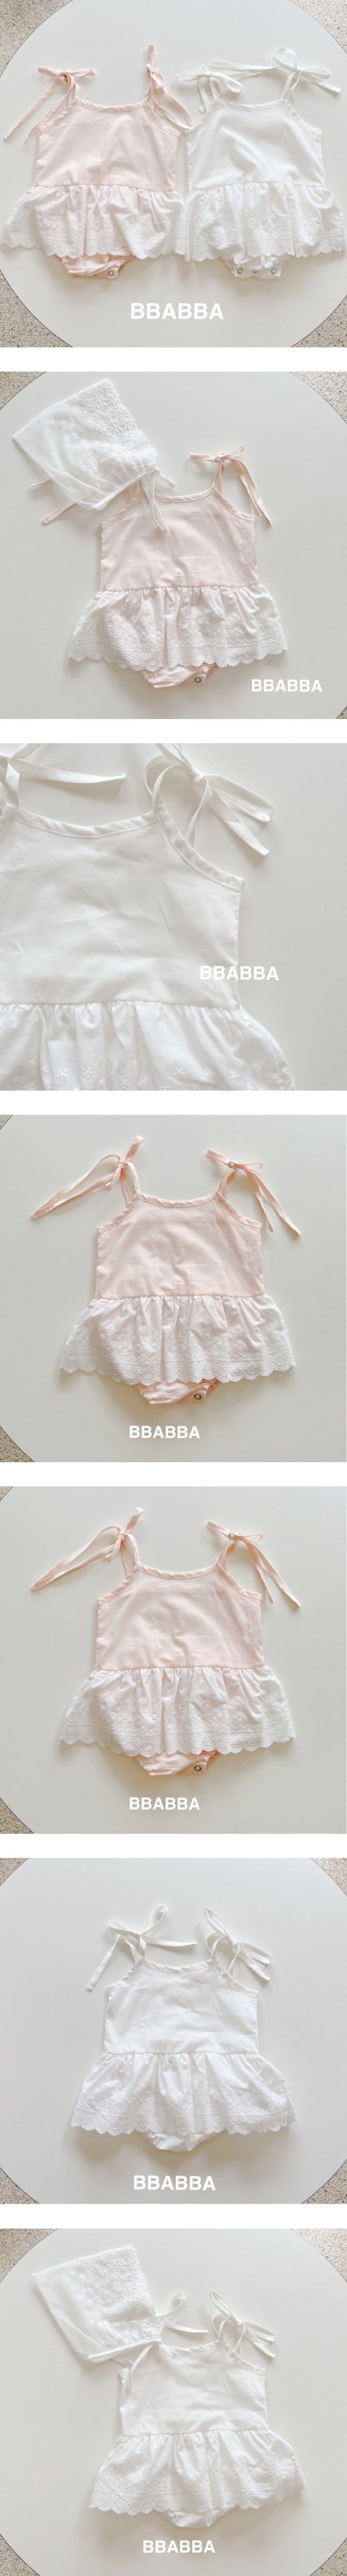 Bbabba - Korean Baby Fashion - #babyootd - Milk String Lace Bodysuit